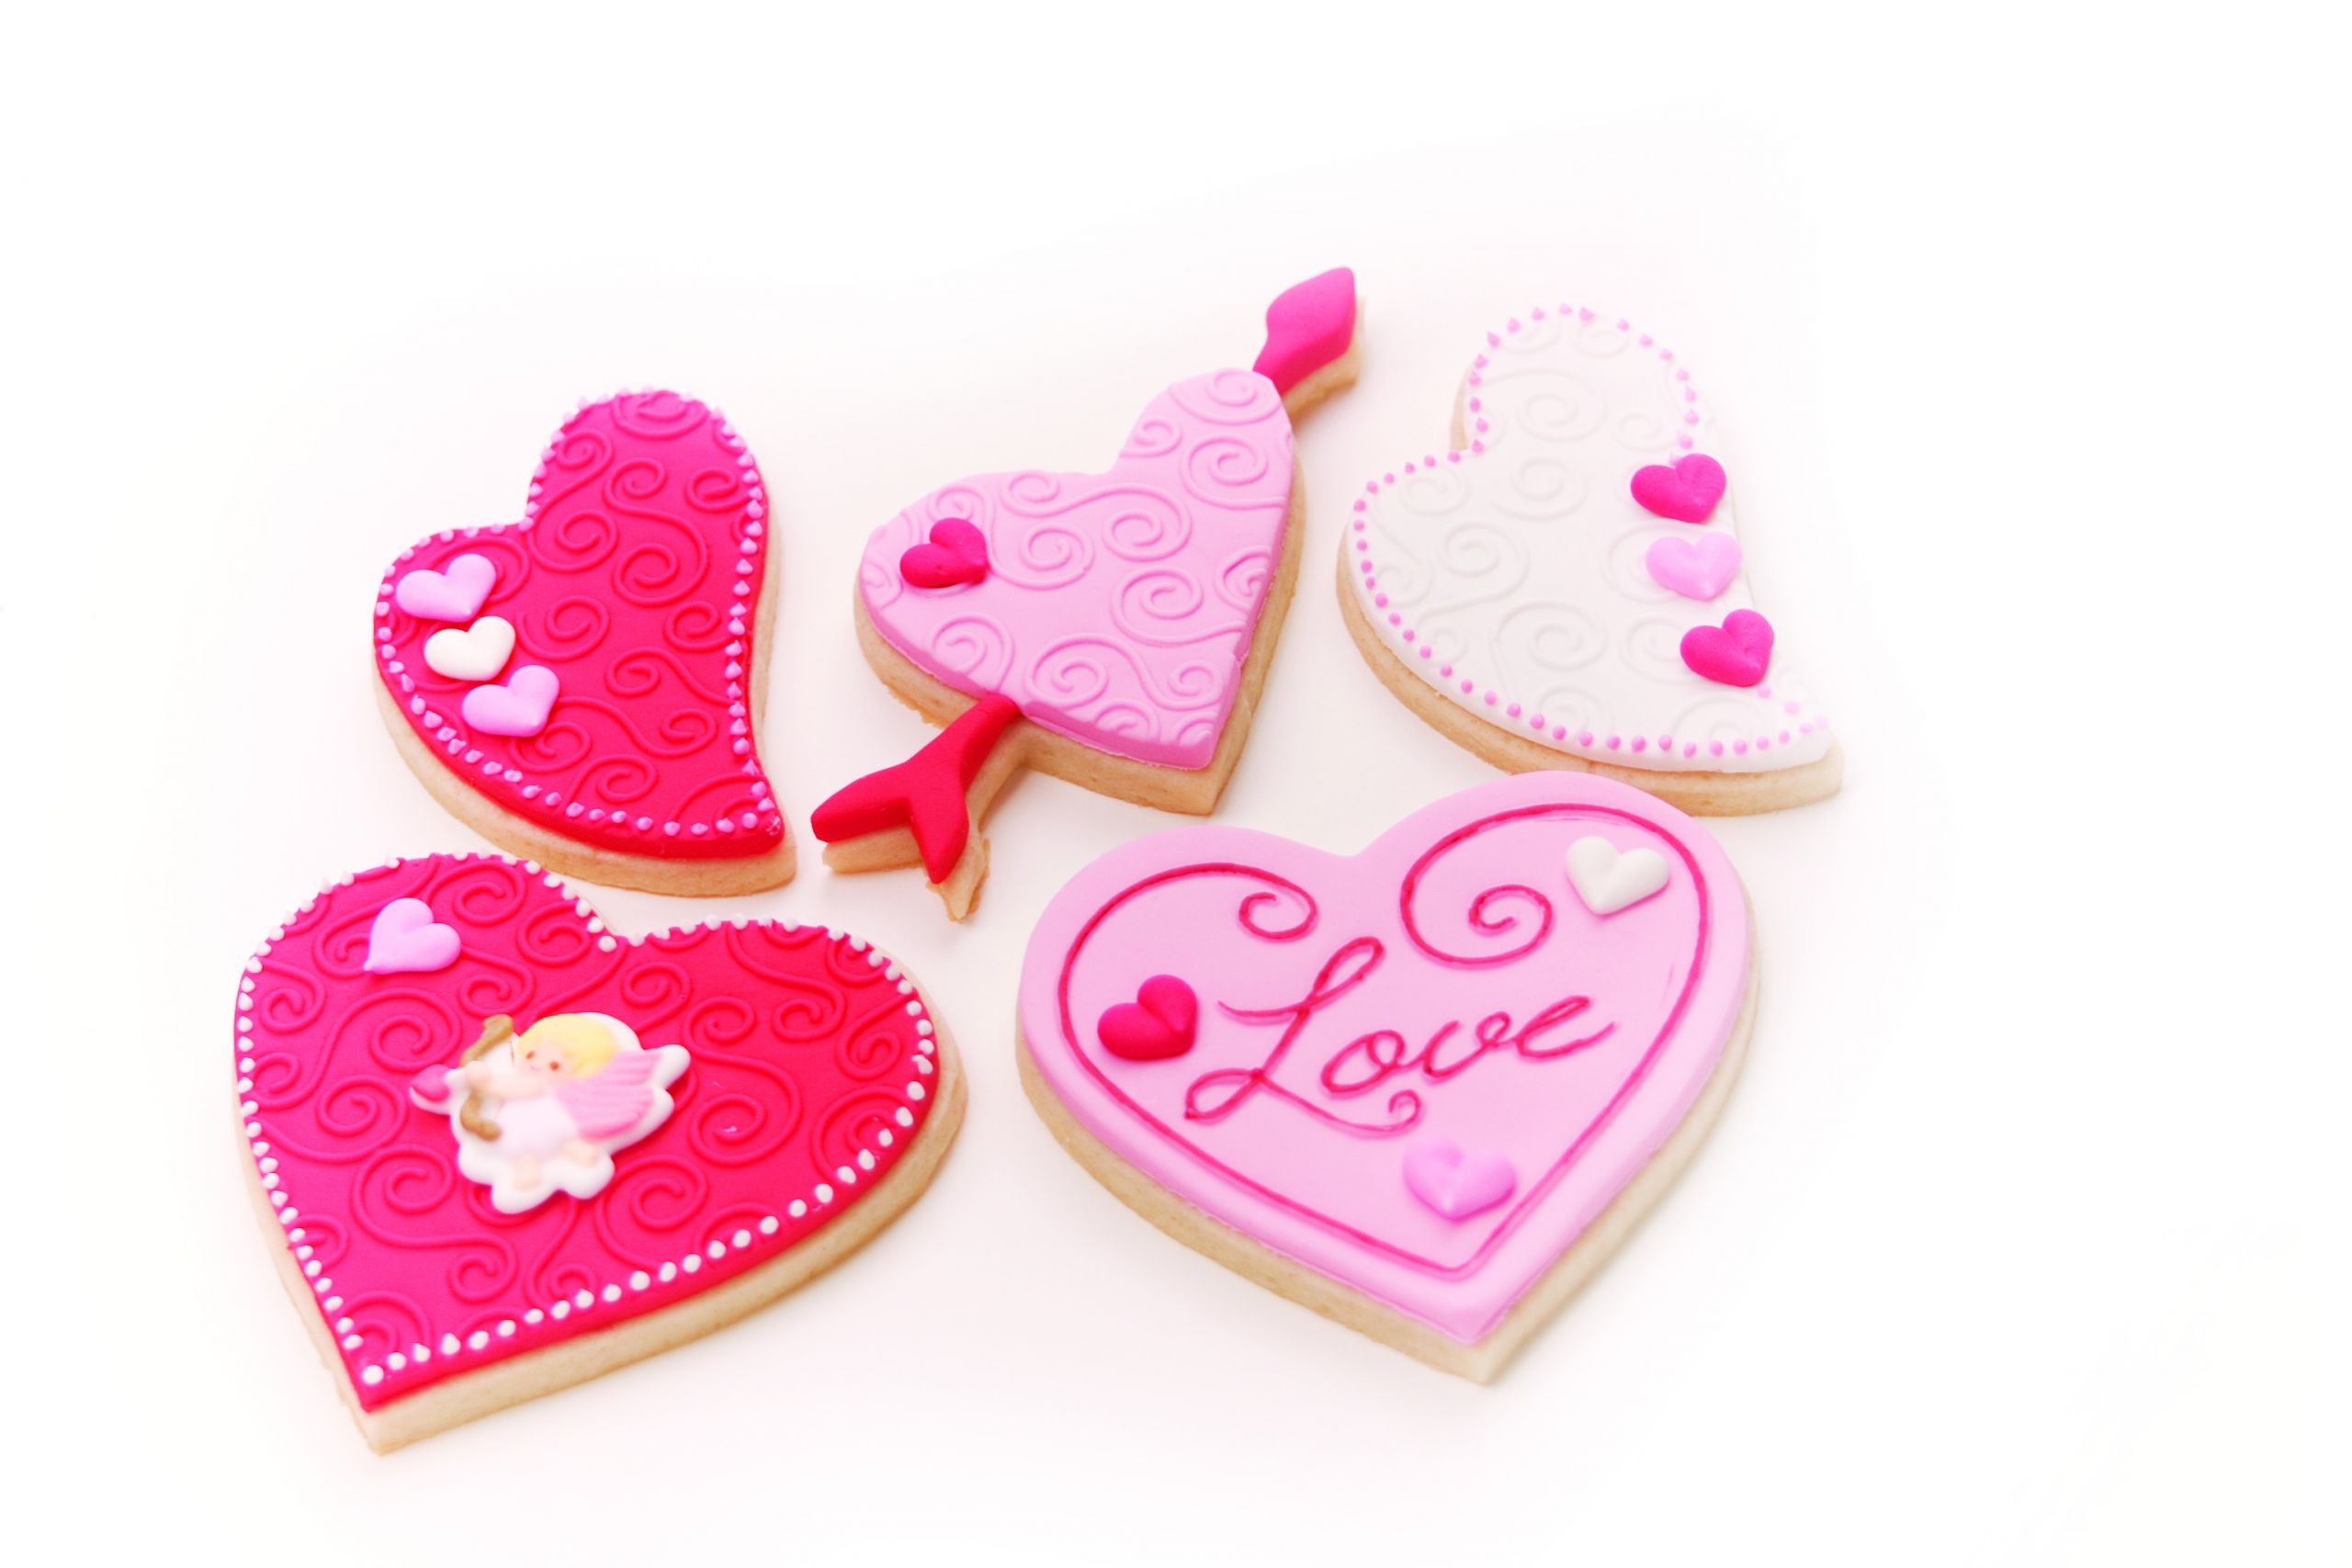 Valentine Sugar Cookies Decorating Ideas
 Cupid Valentine Cookies